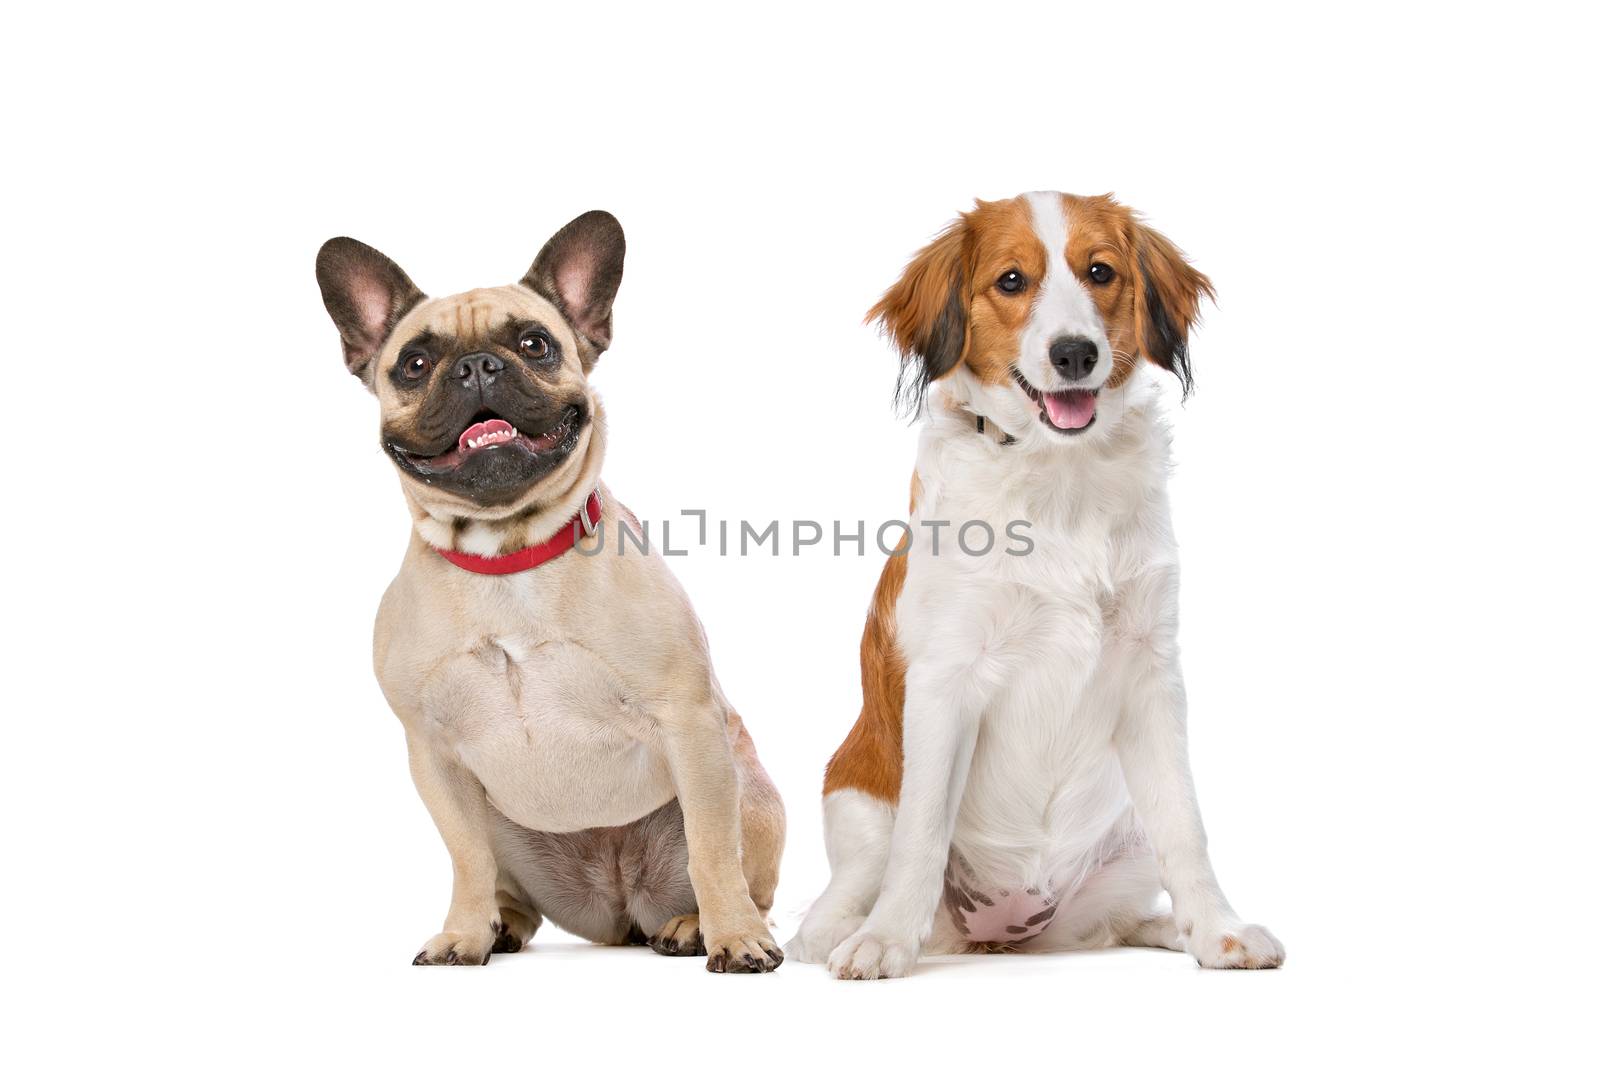 French Bulldog and a Kooiker Dog by eriklam